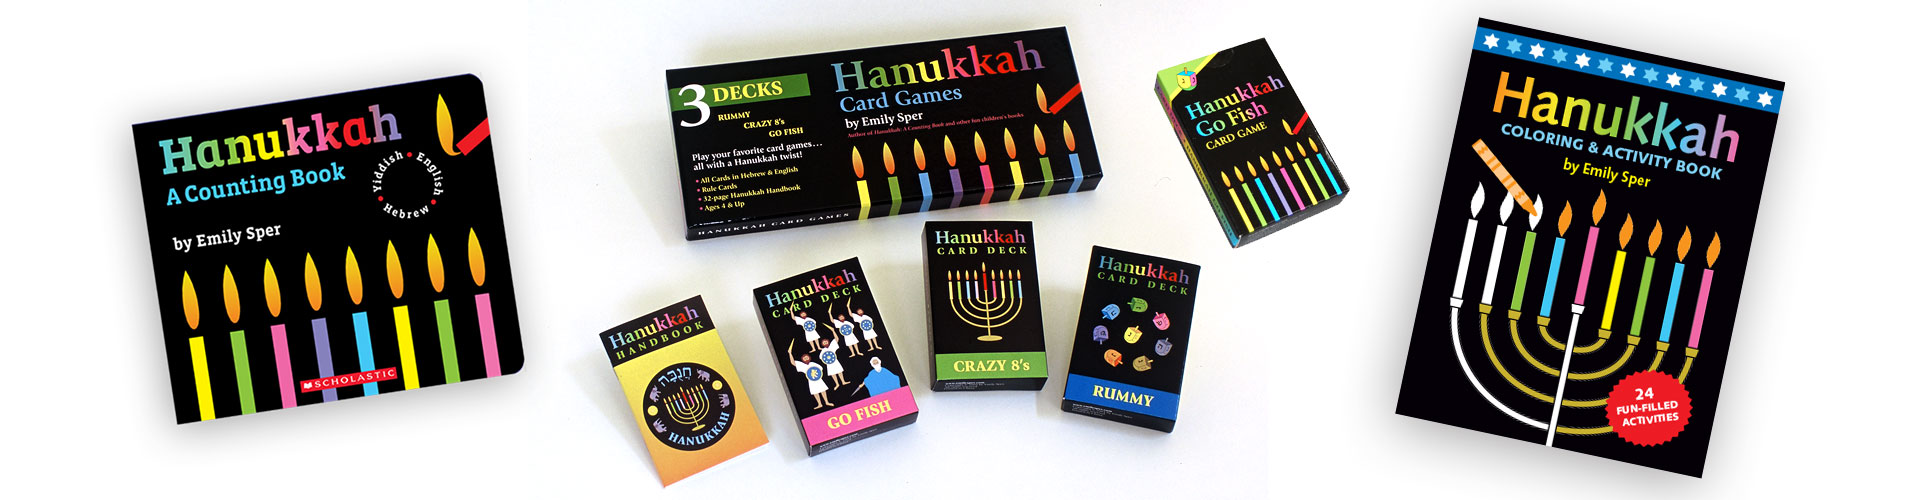 Hanukkah Books and Card Games